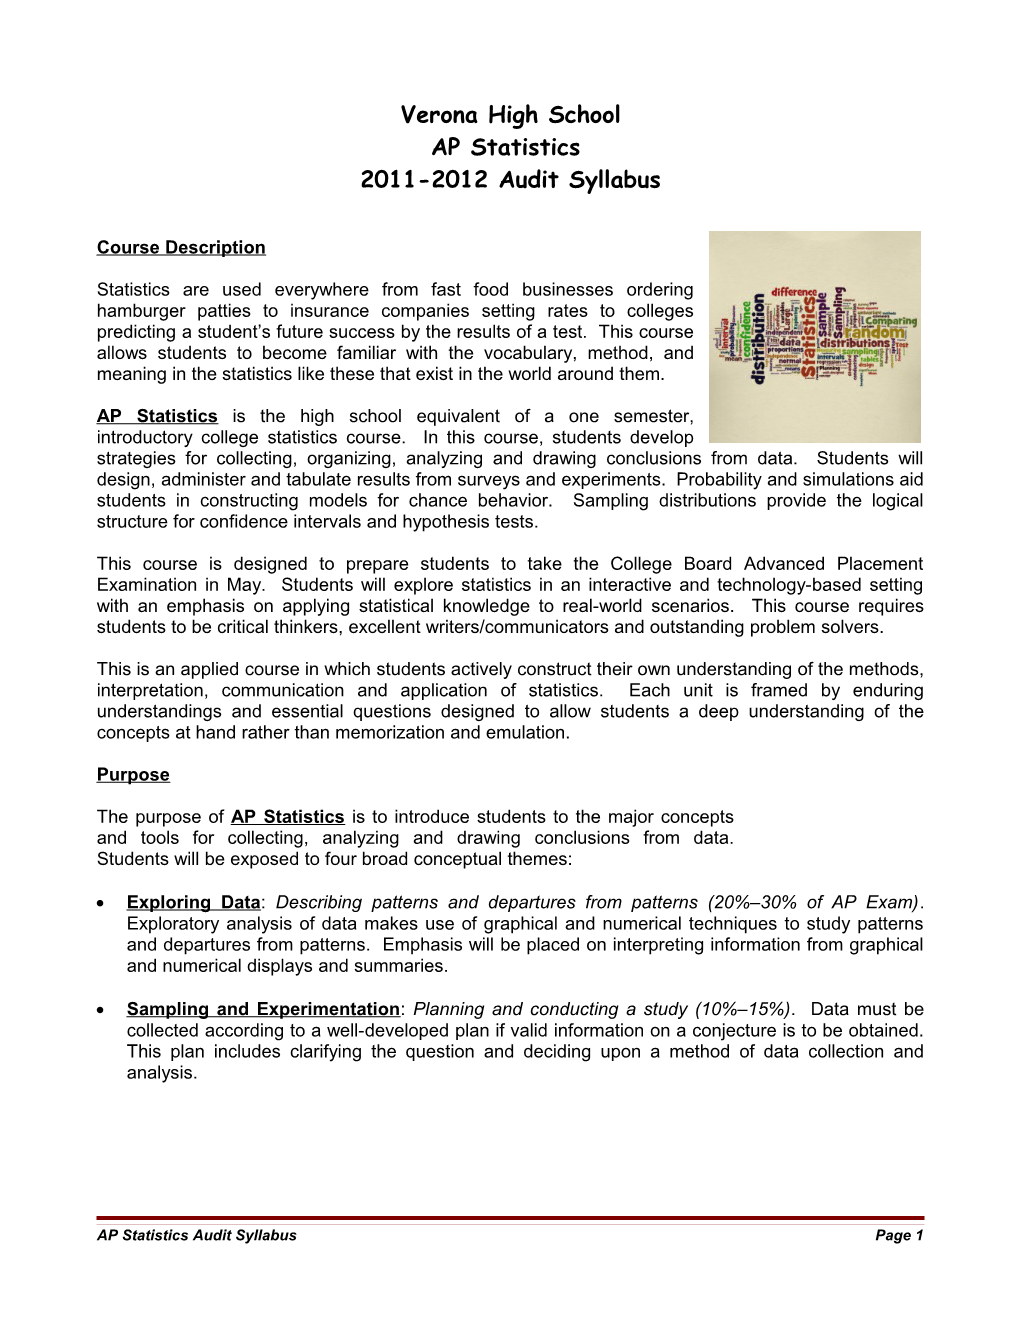 AP Statistics Sample Audit Syllabus